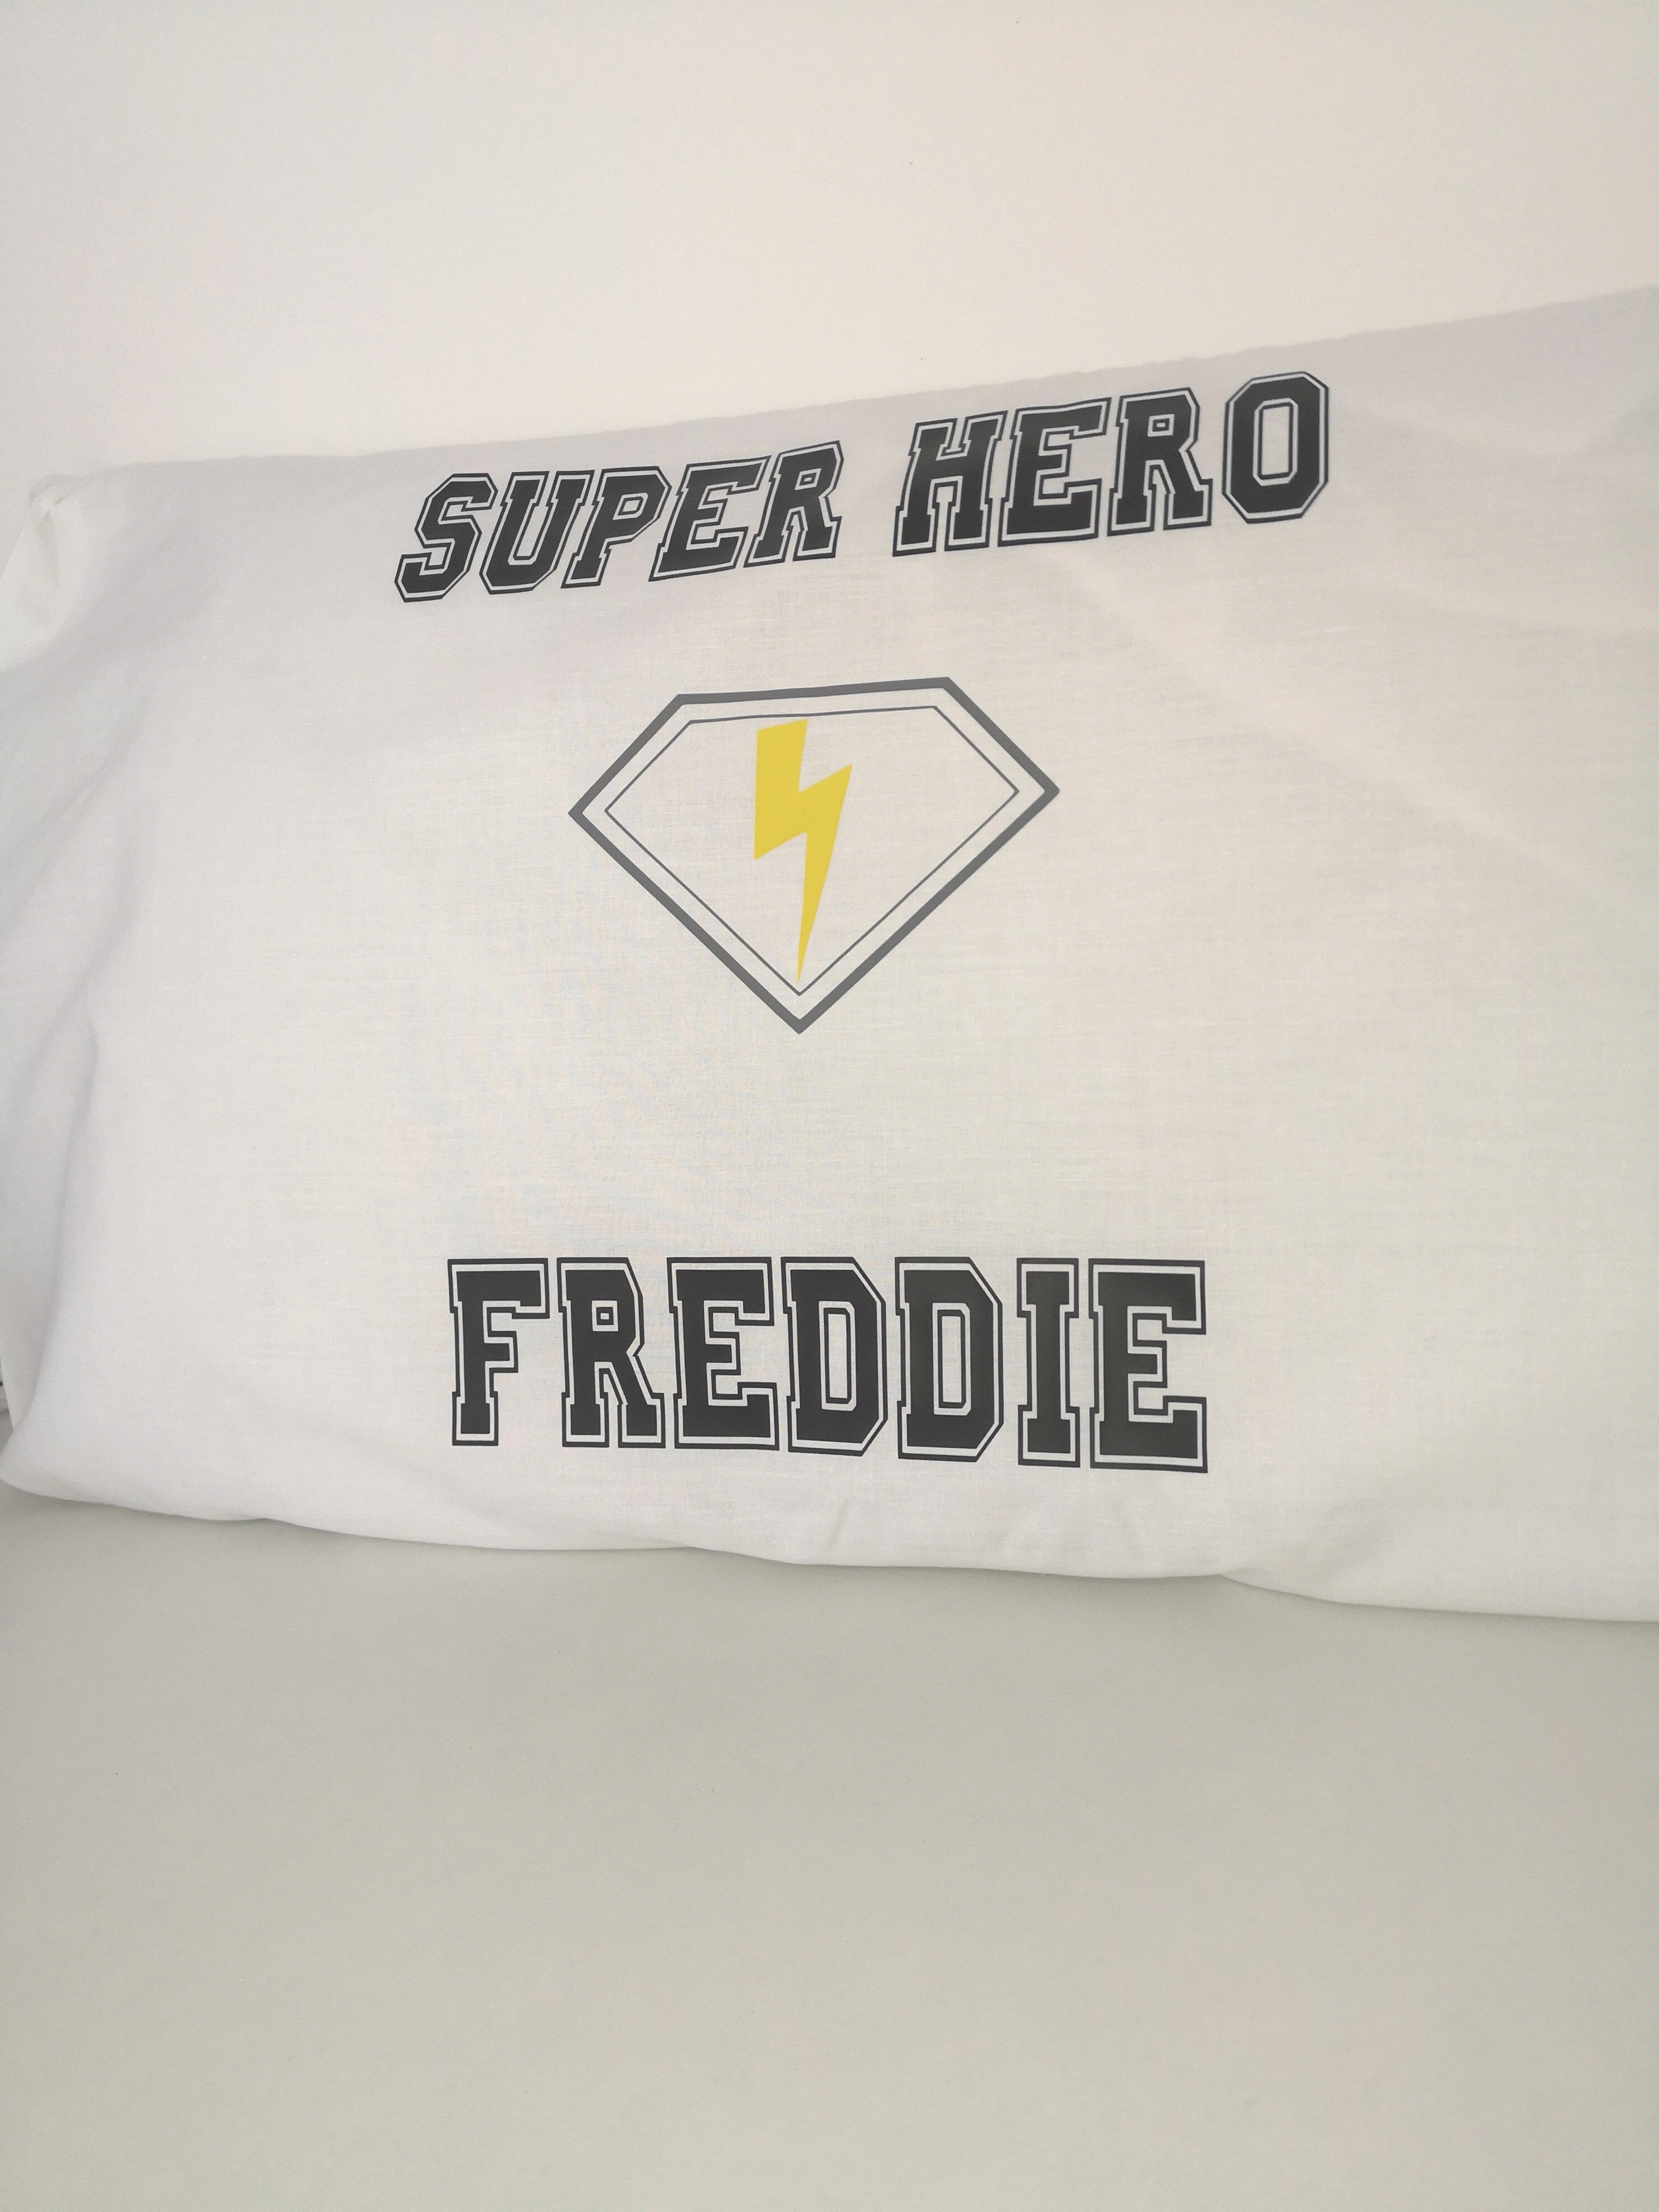 Super Hero pillow case